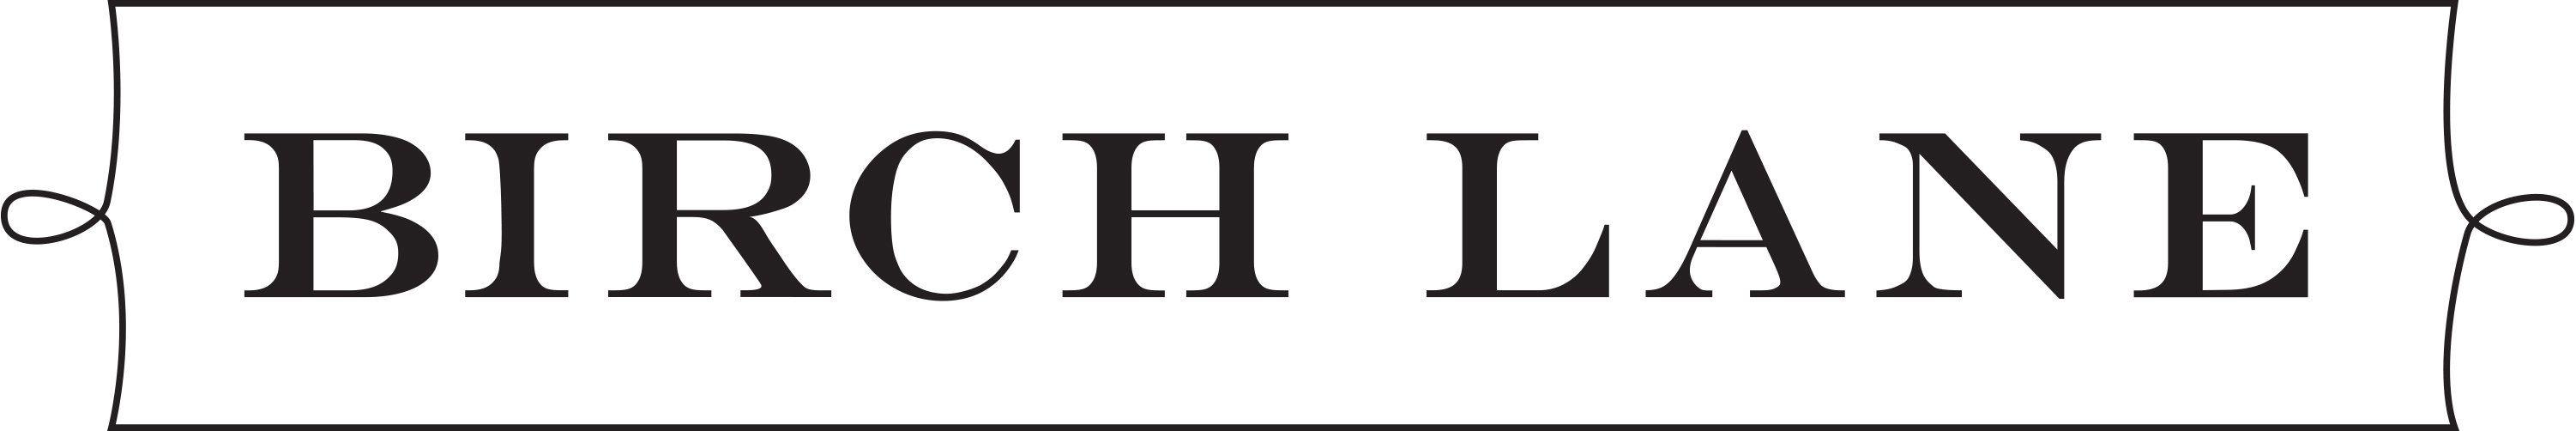 Birch Lane Logo - About | Wayfair